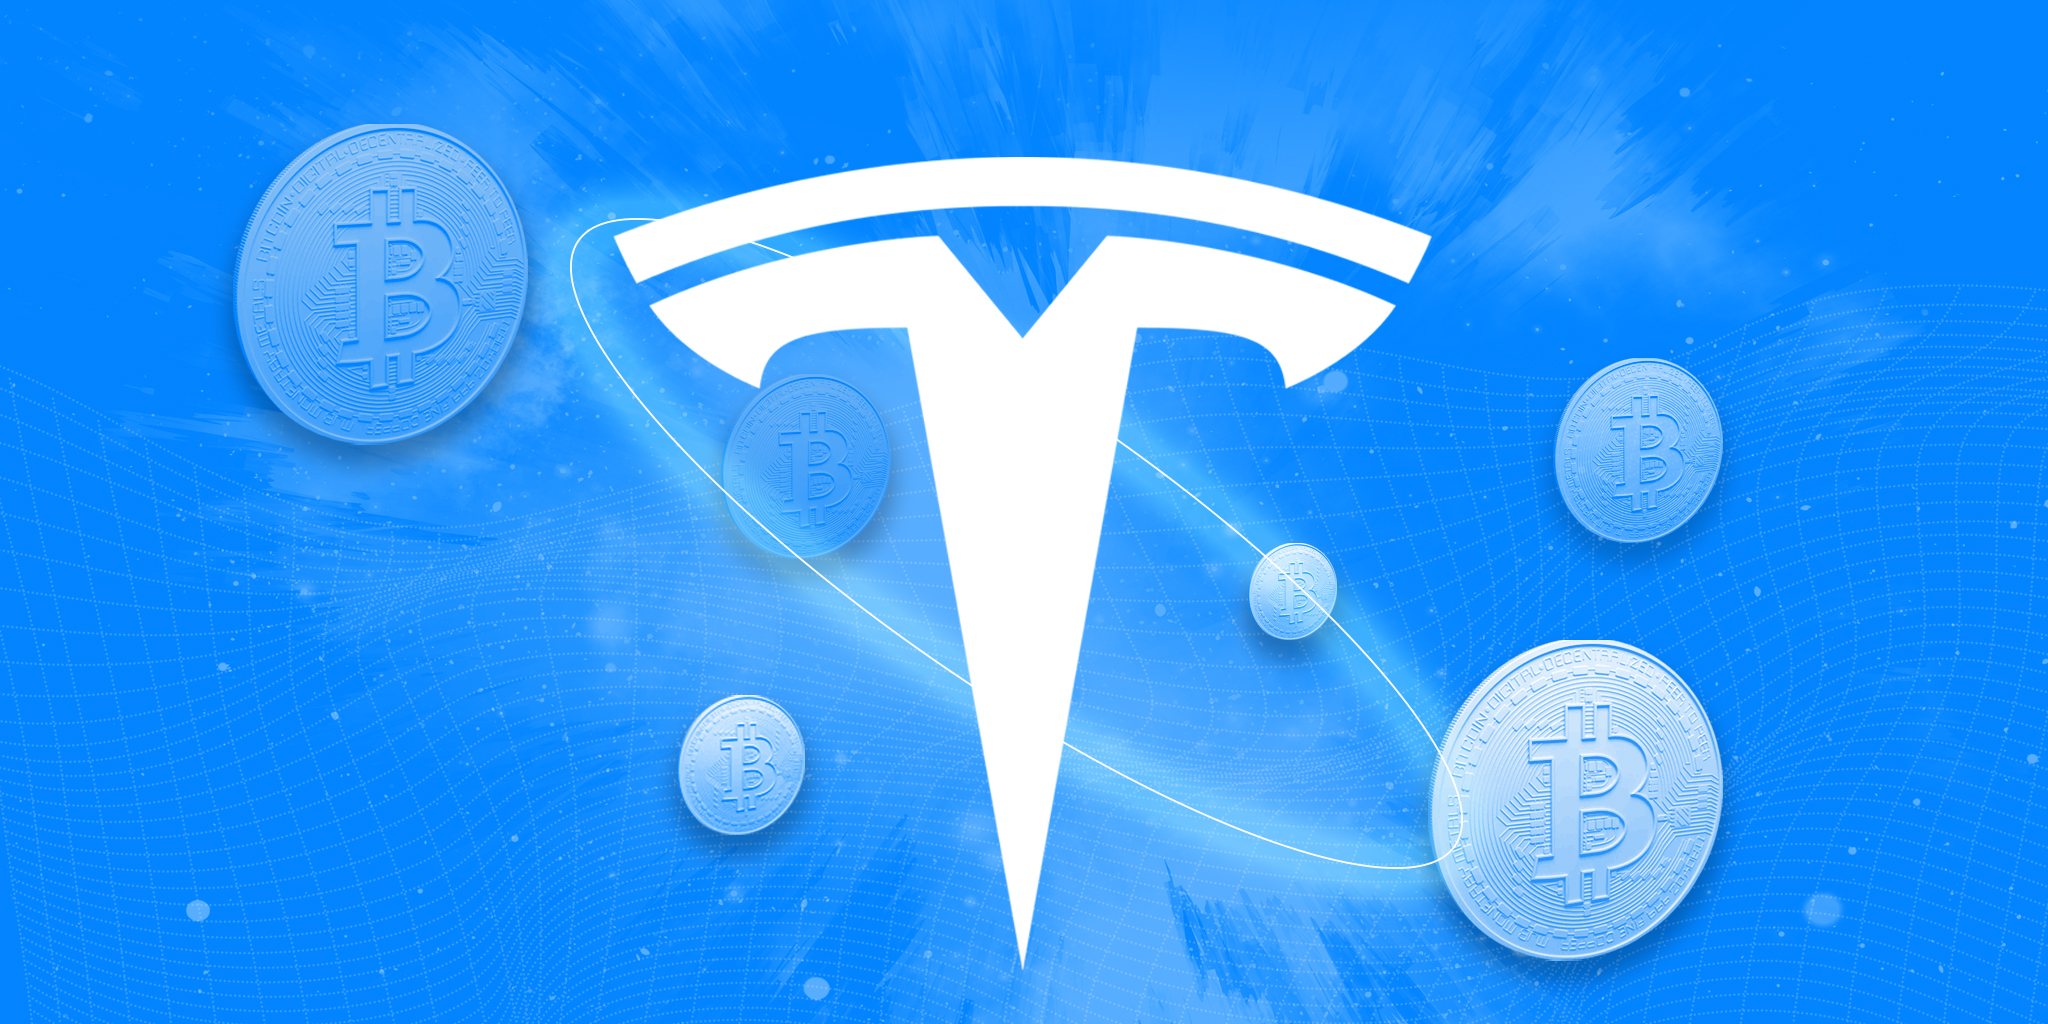 A new step towards mass adoption: buy a Tesla with Bitcoin